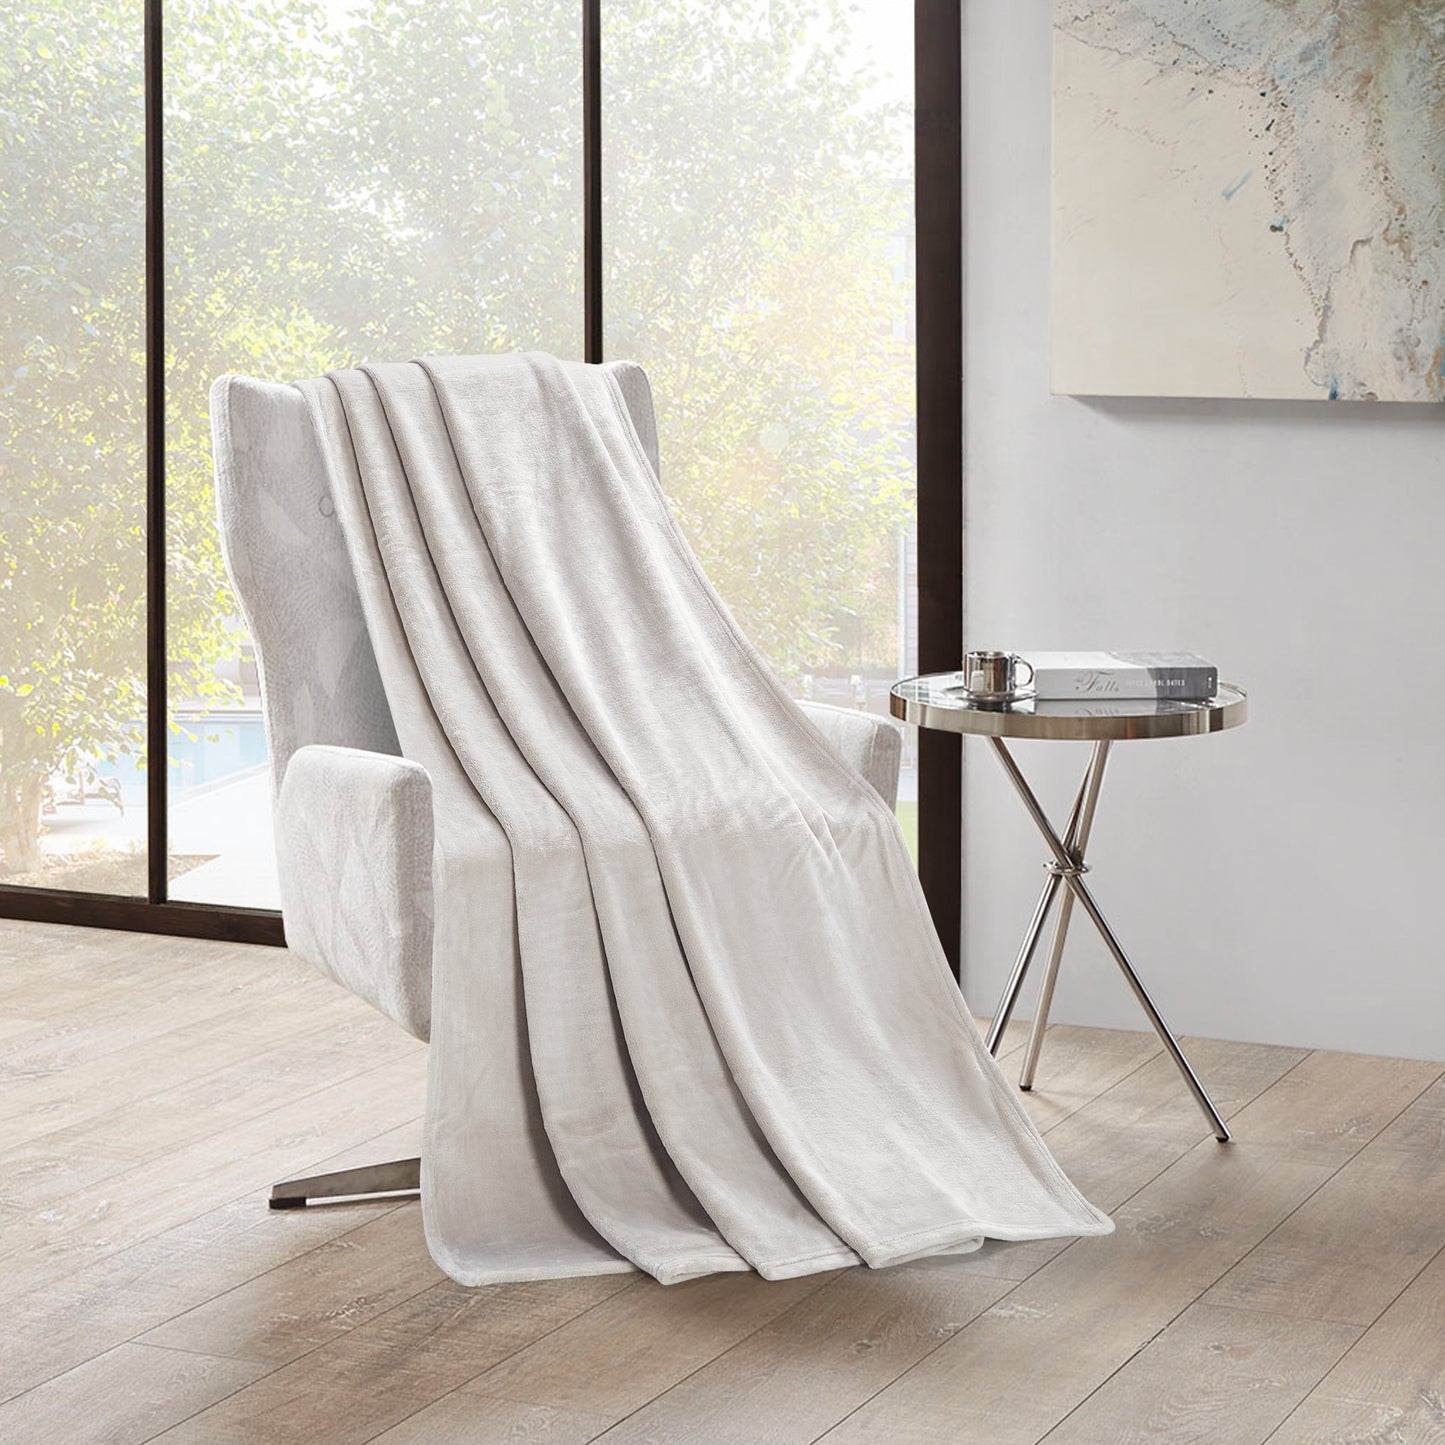 400 Series Solid Plush Blanket - Stone